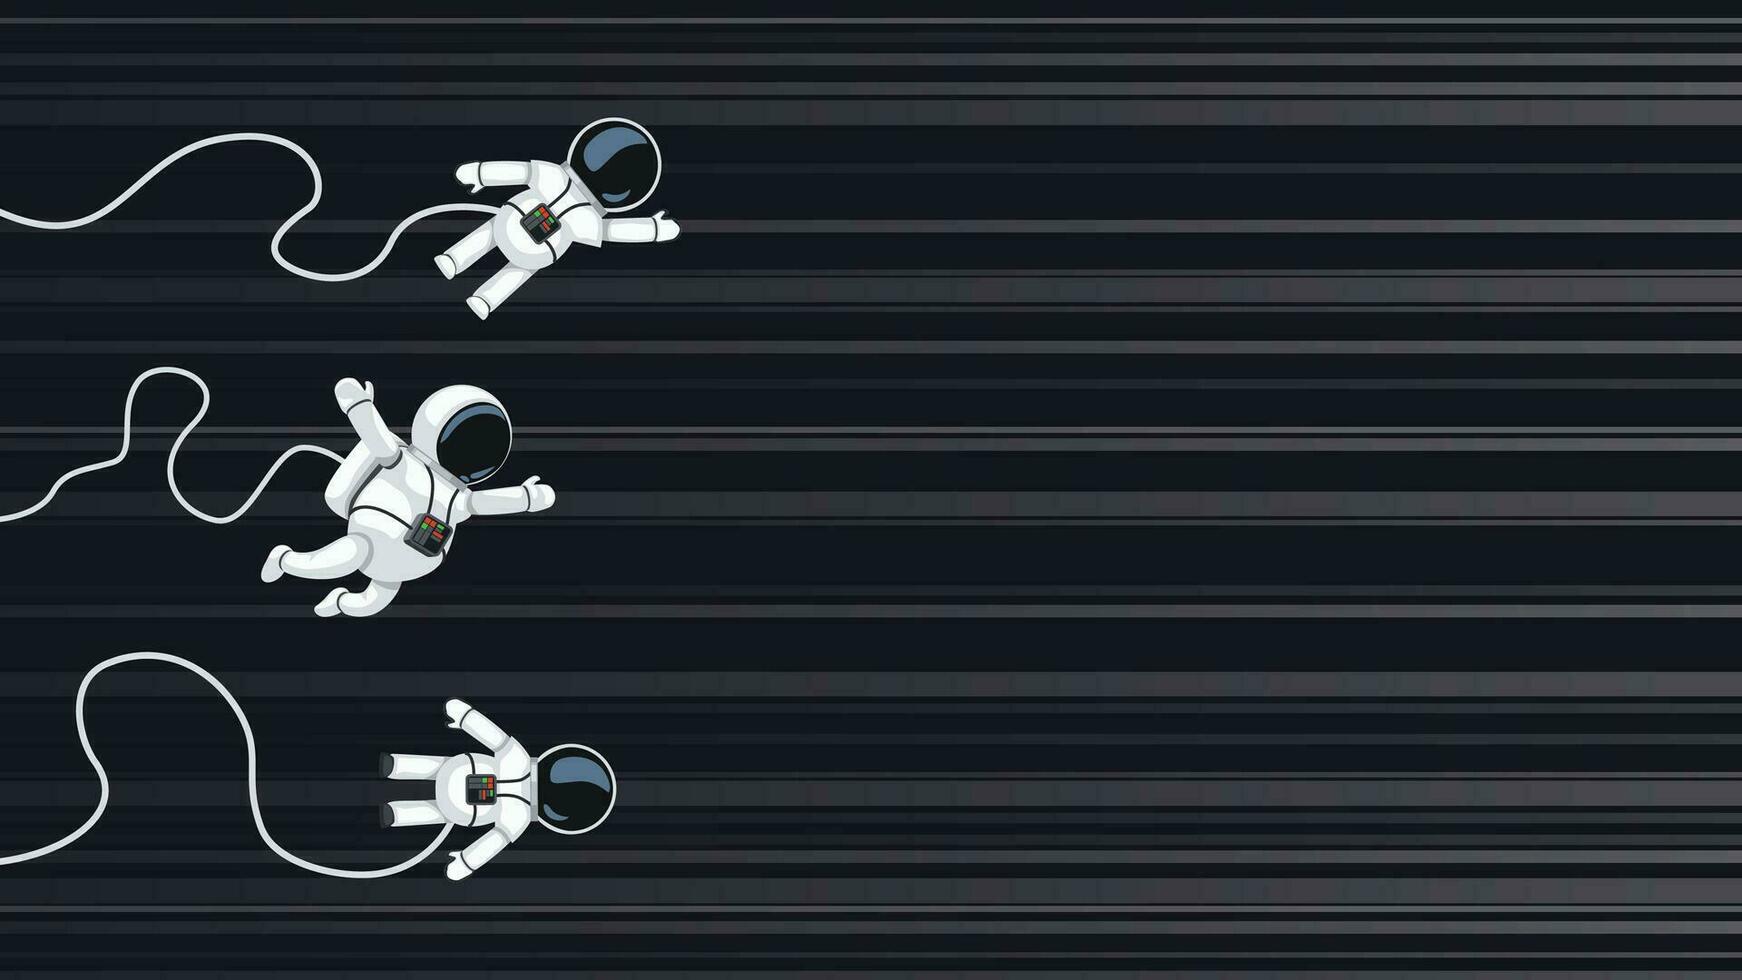 astronauts racing on light speed vector